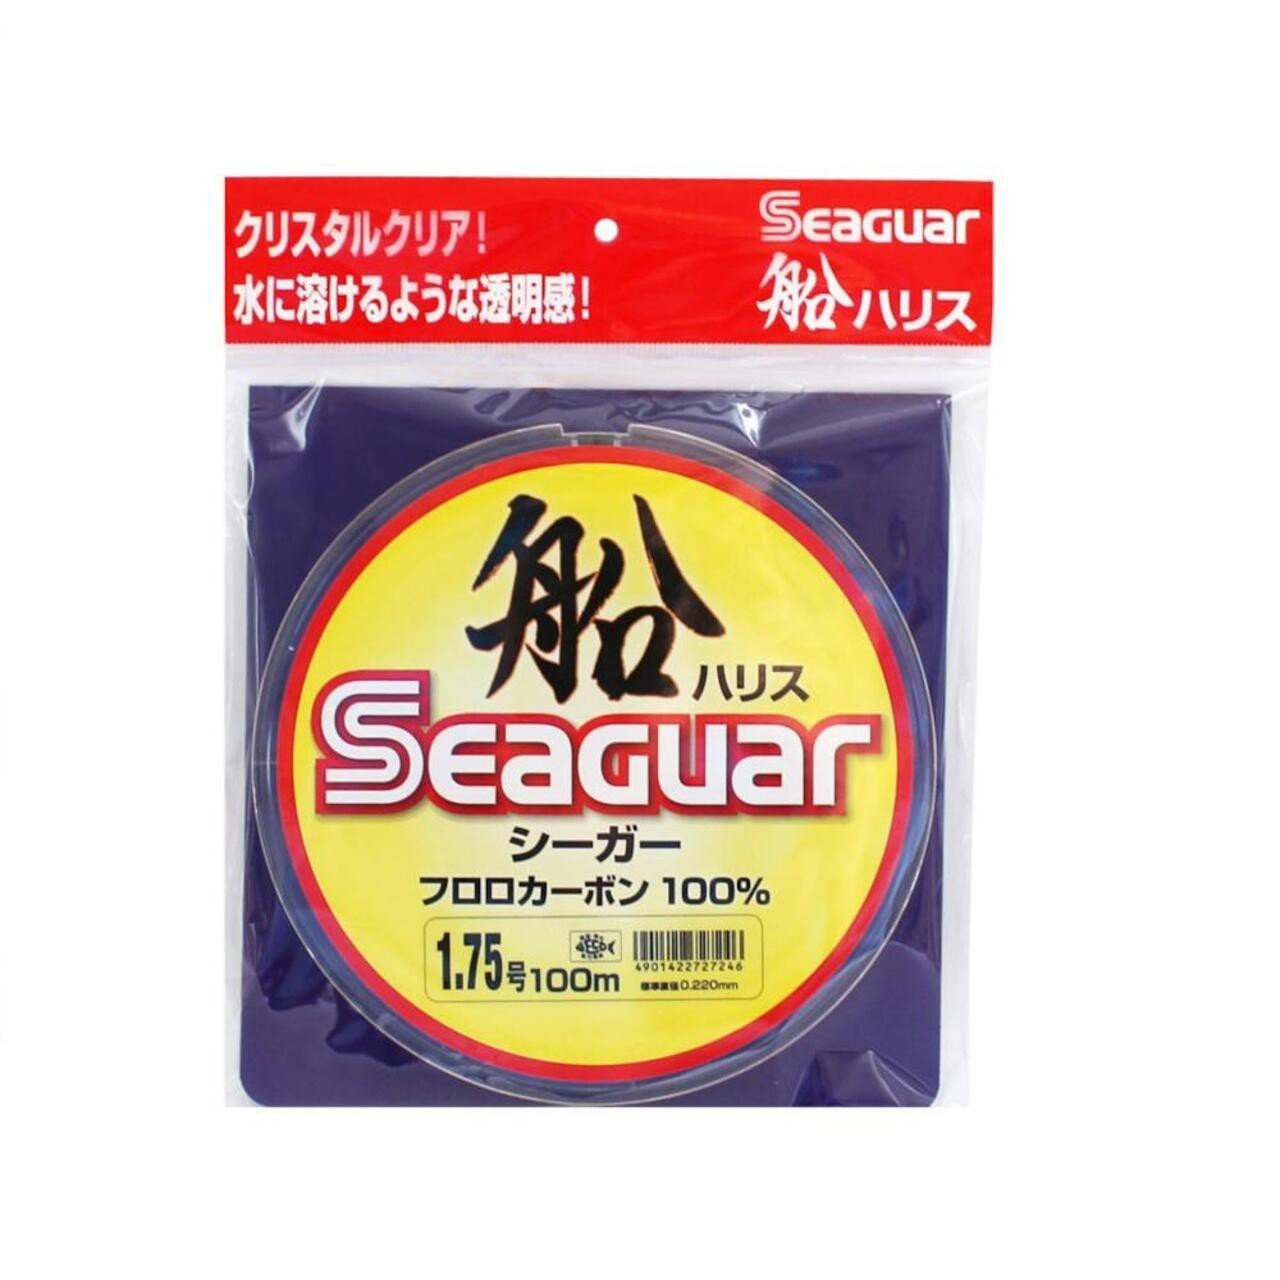 Seaguar Fune Harisu %100 Fluoro Carbon Misina 100mt 0.435 mm